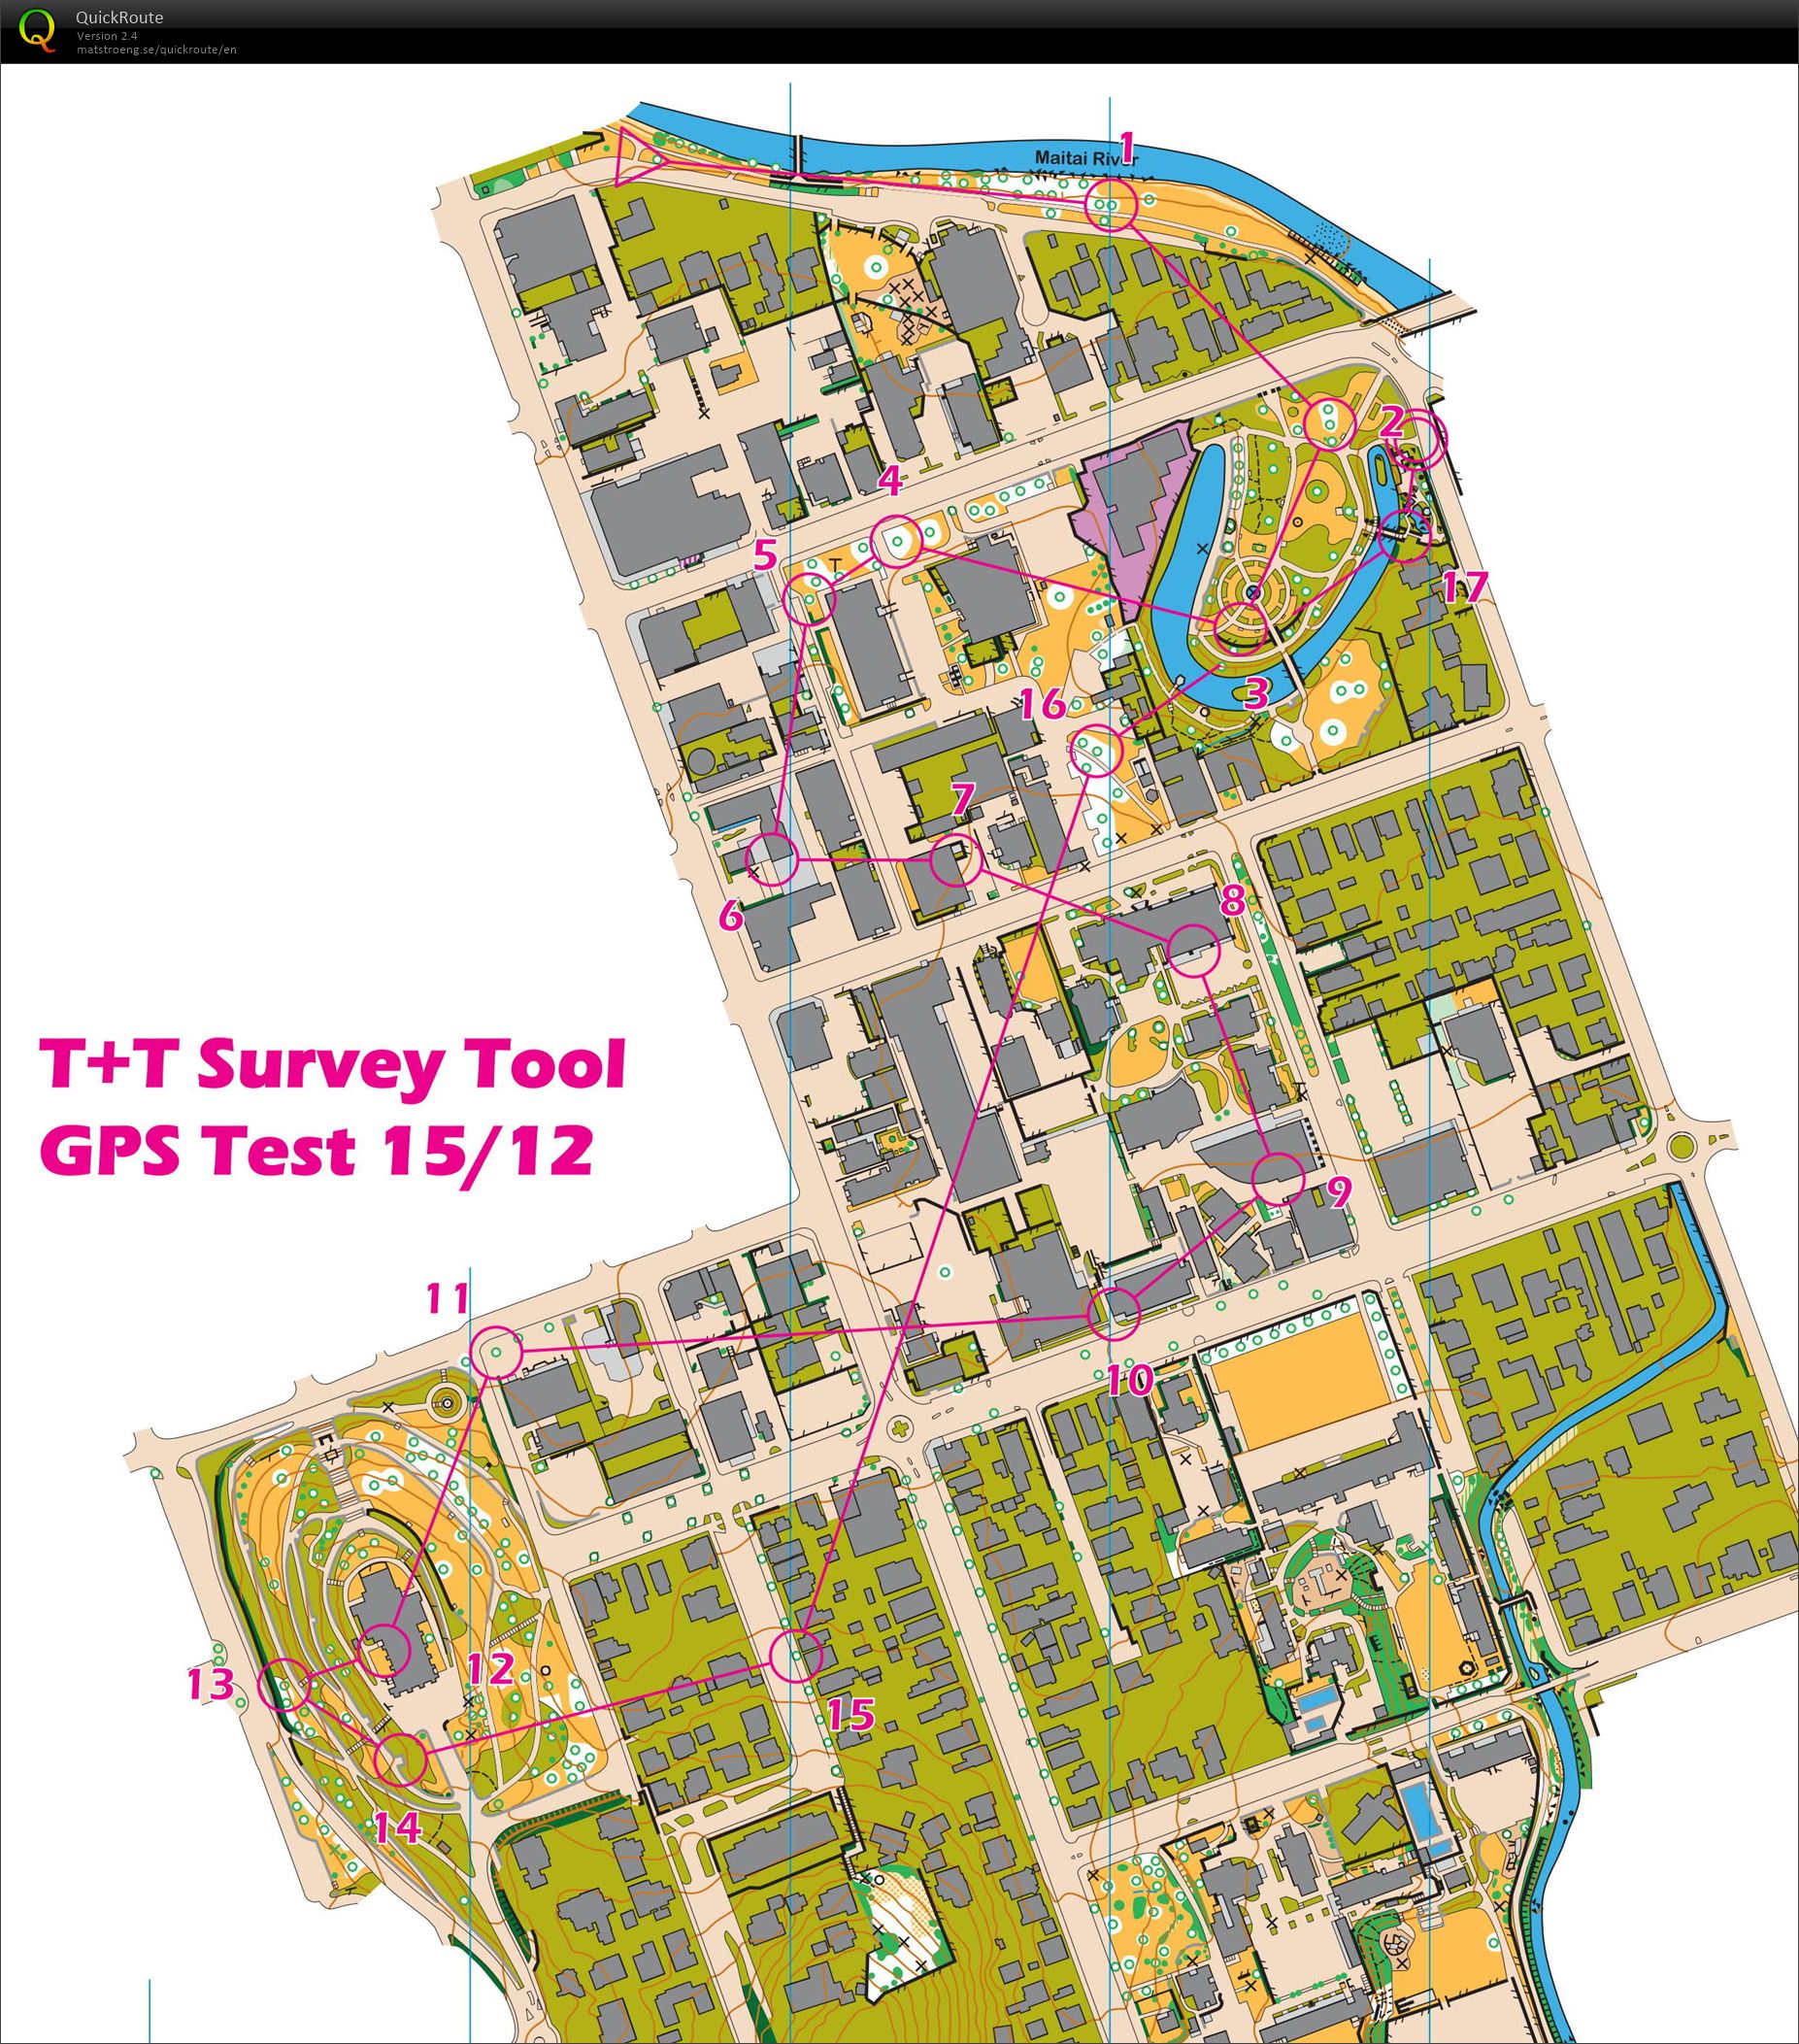 T+T Survey Tool Test (14-12-2020)